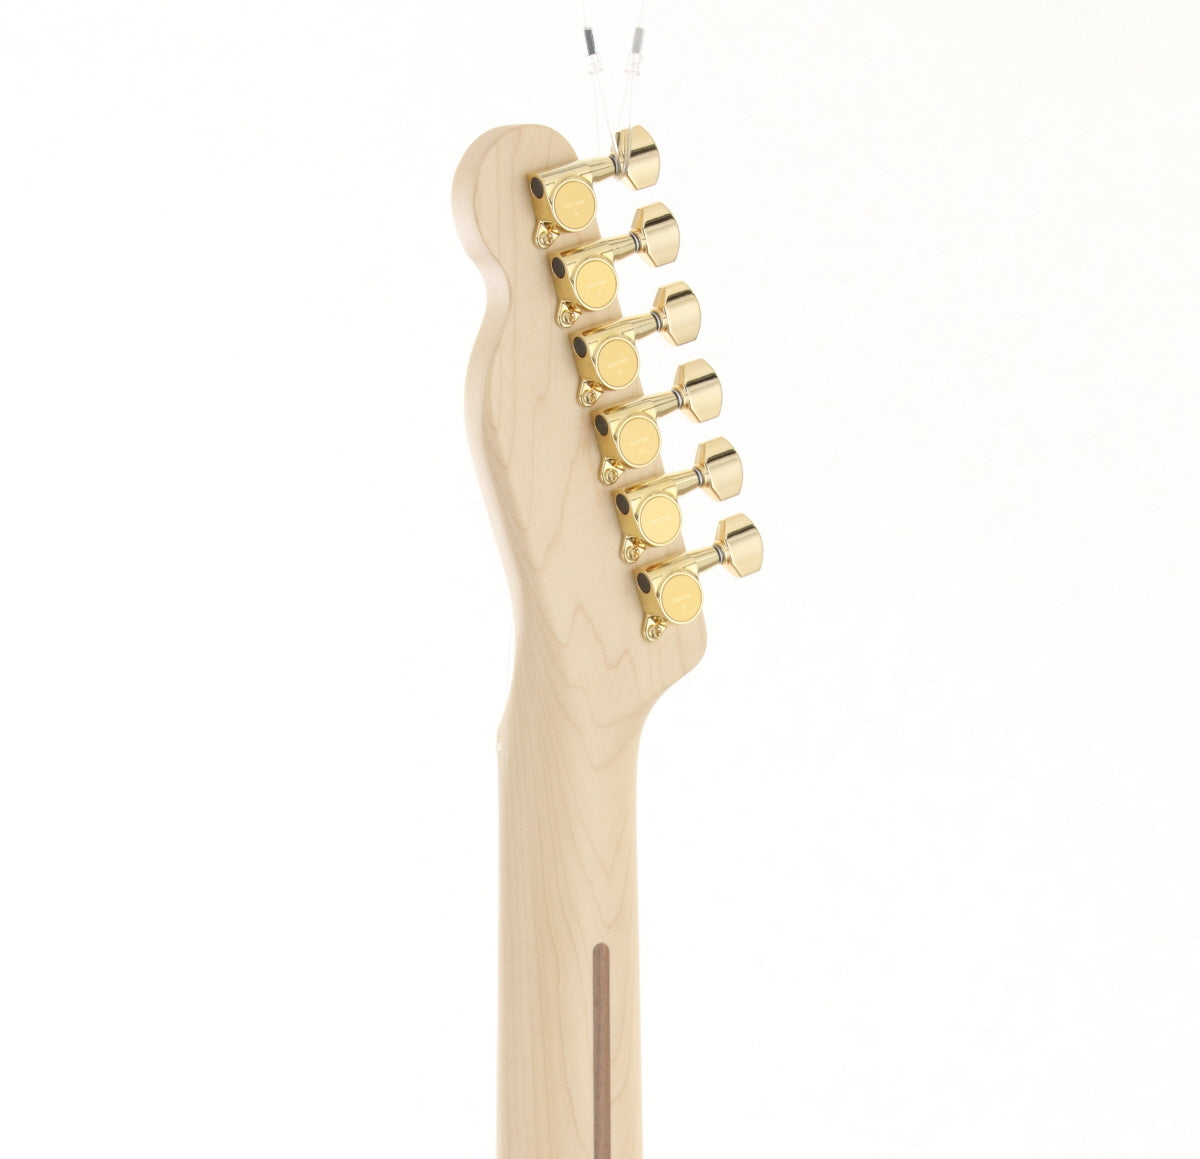 [SN JD17003177] USED Fender Made in Japan / Richie Kotzen Telecaster Brown Sunburst [10]